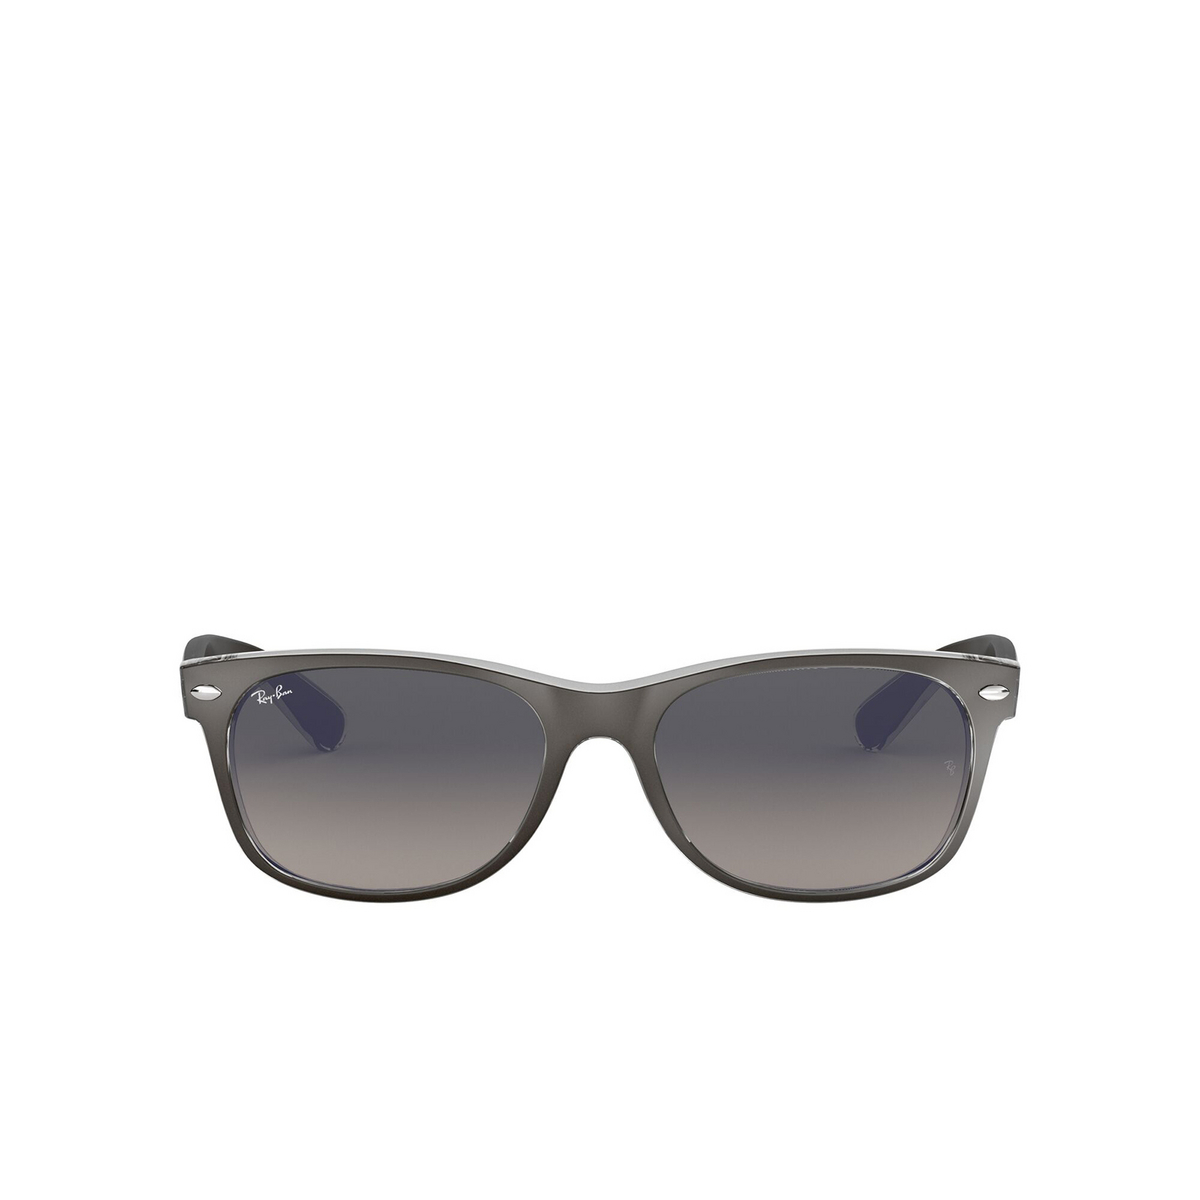 Ray-Ban NEW WAYFARER Sunglasses 614371 Gunmetal on Transparent - front view